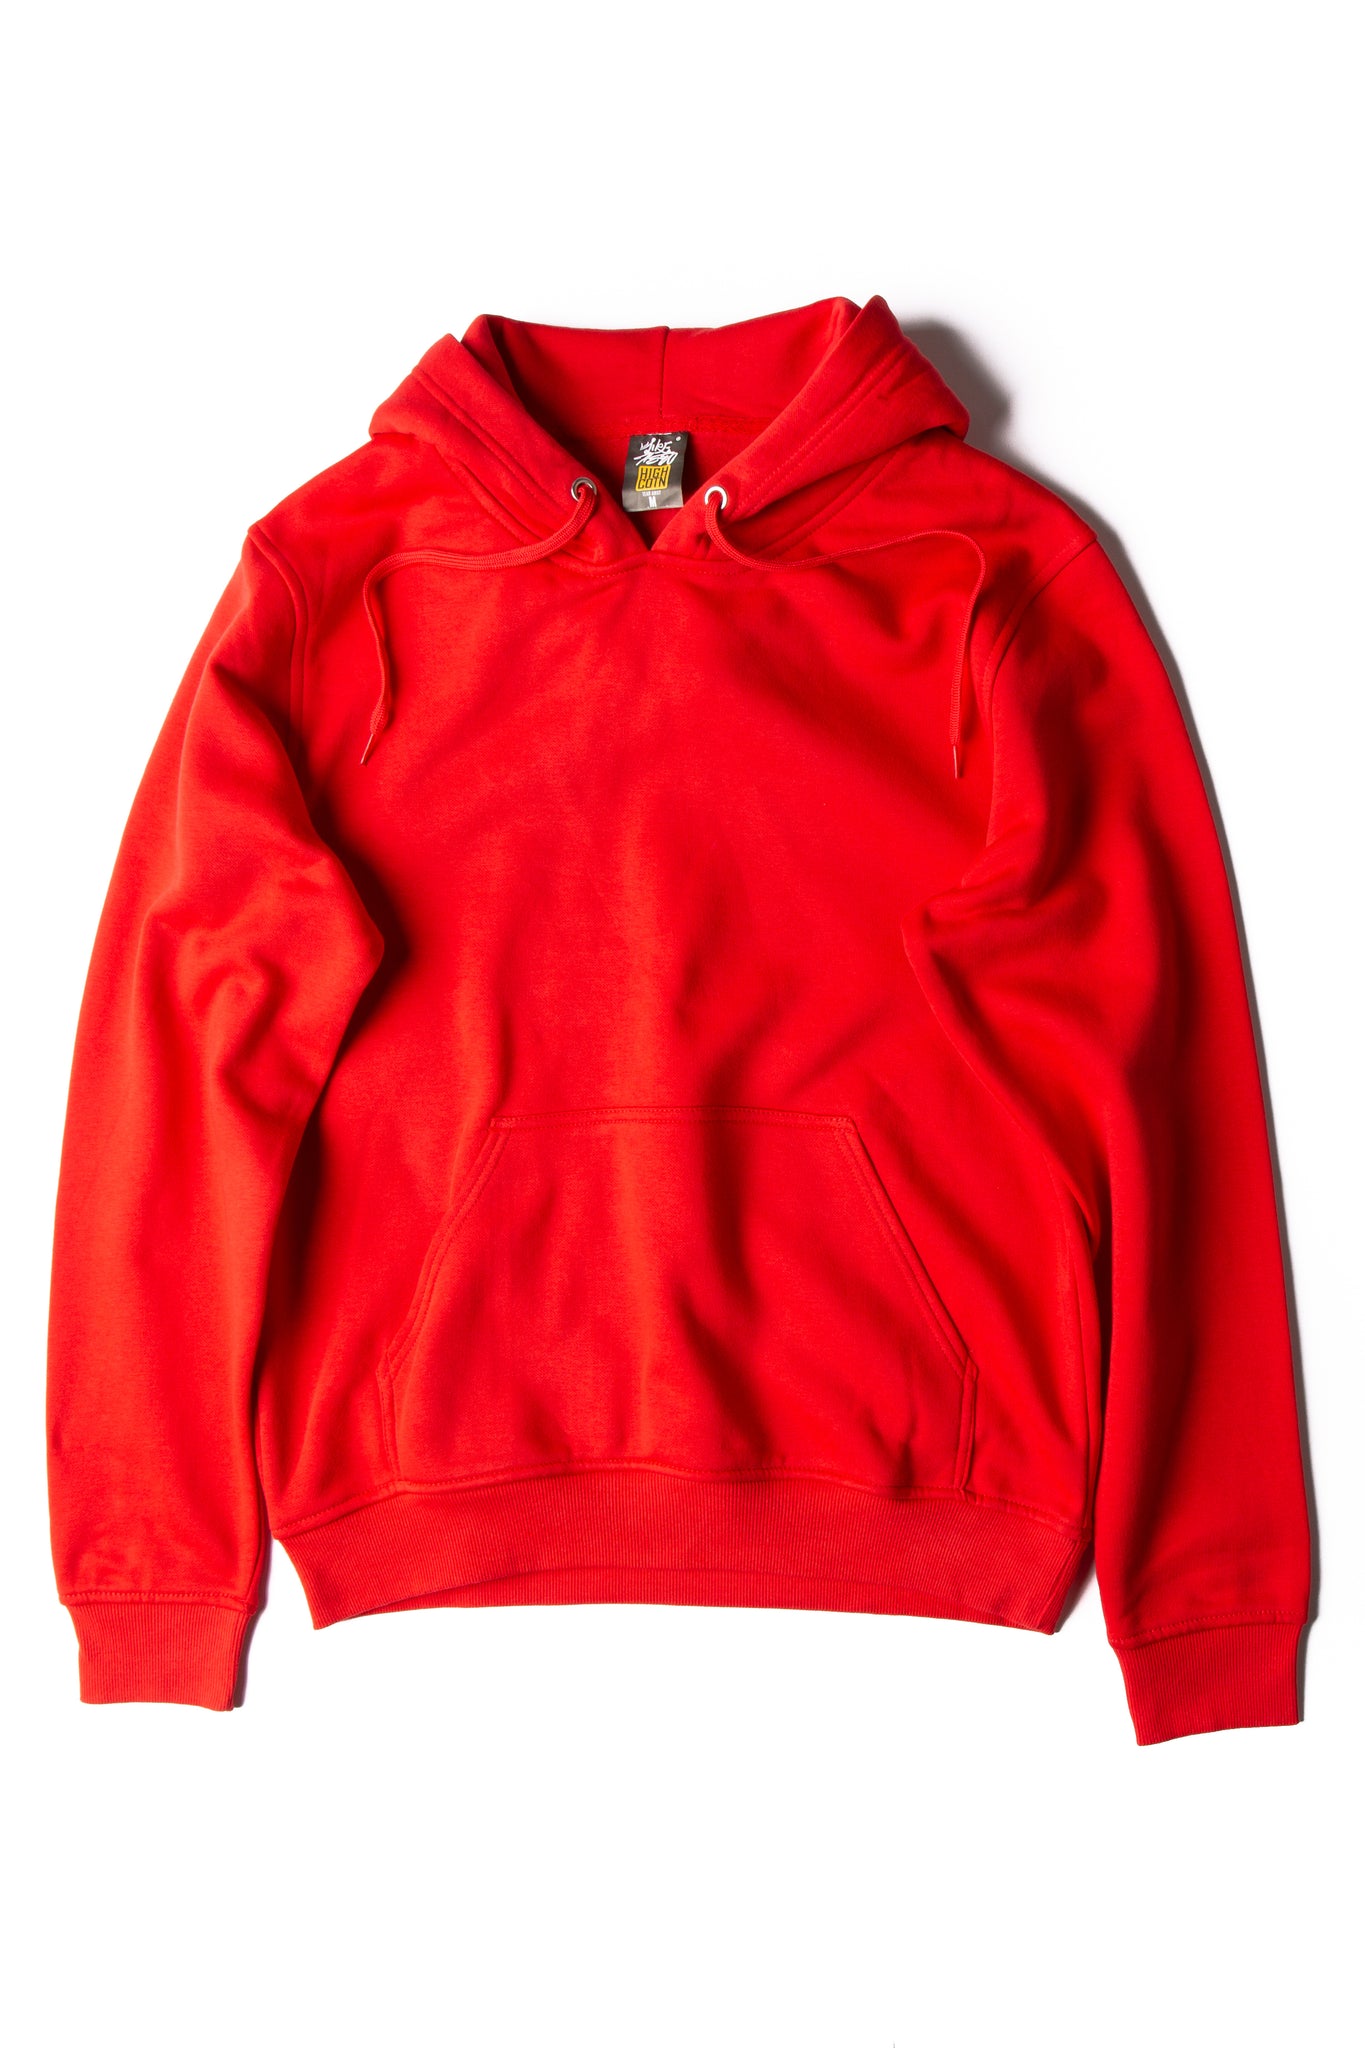 a red hoodie